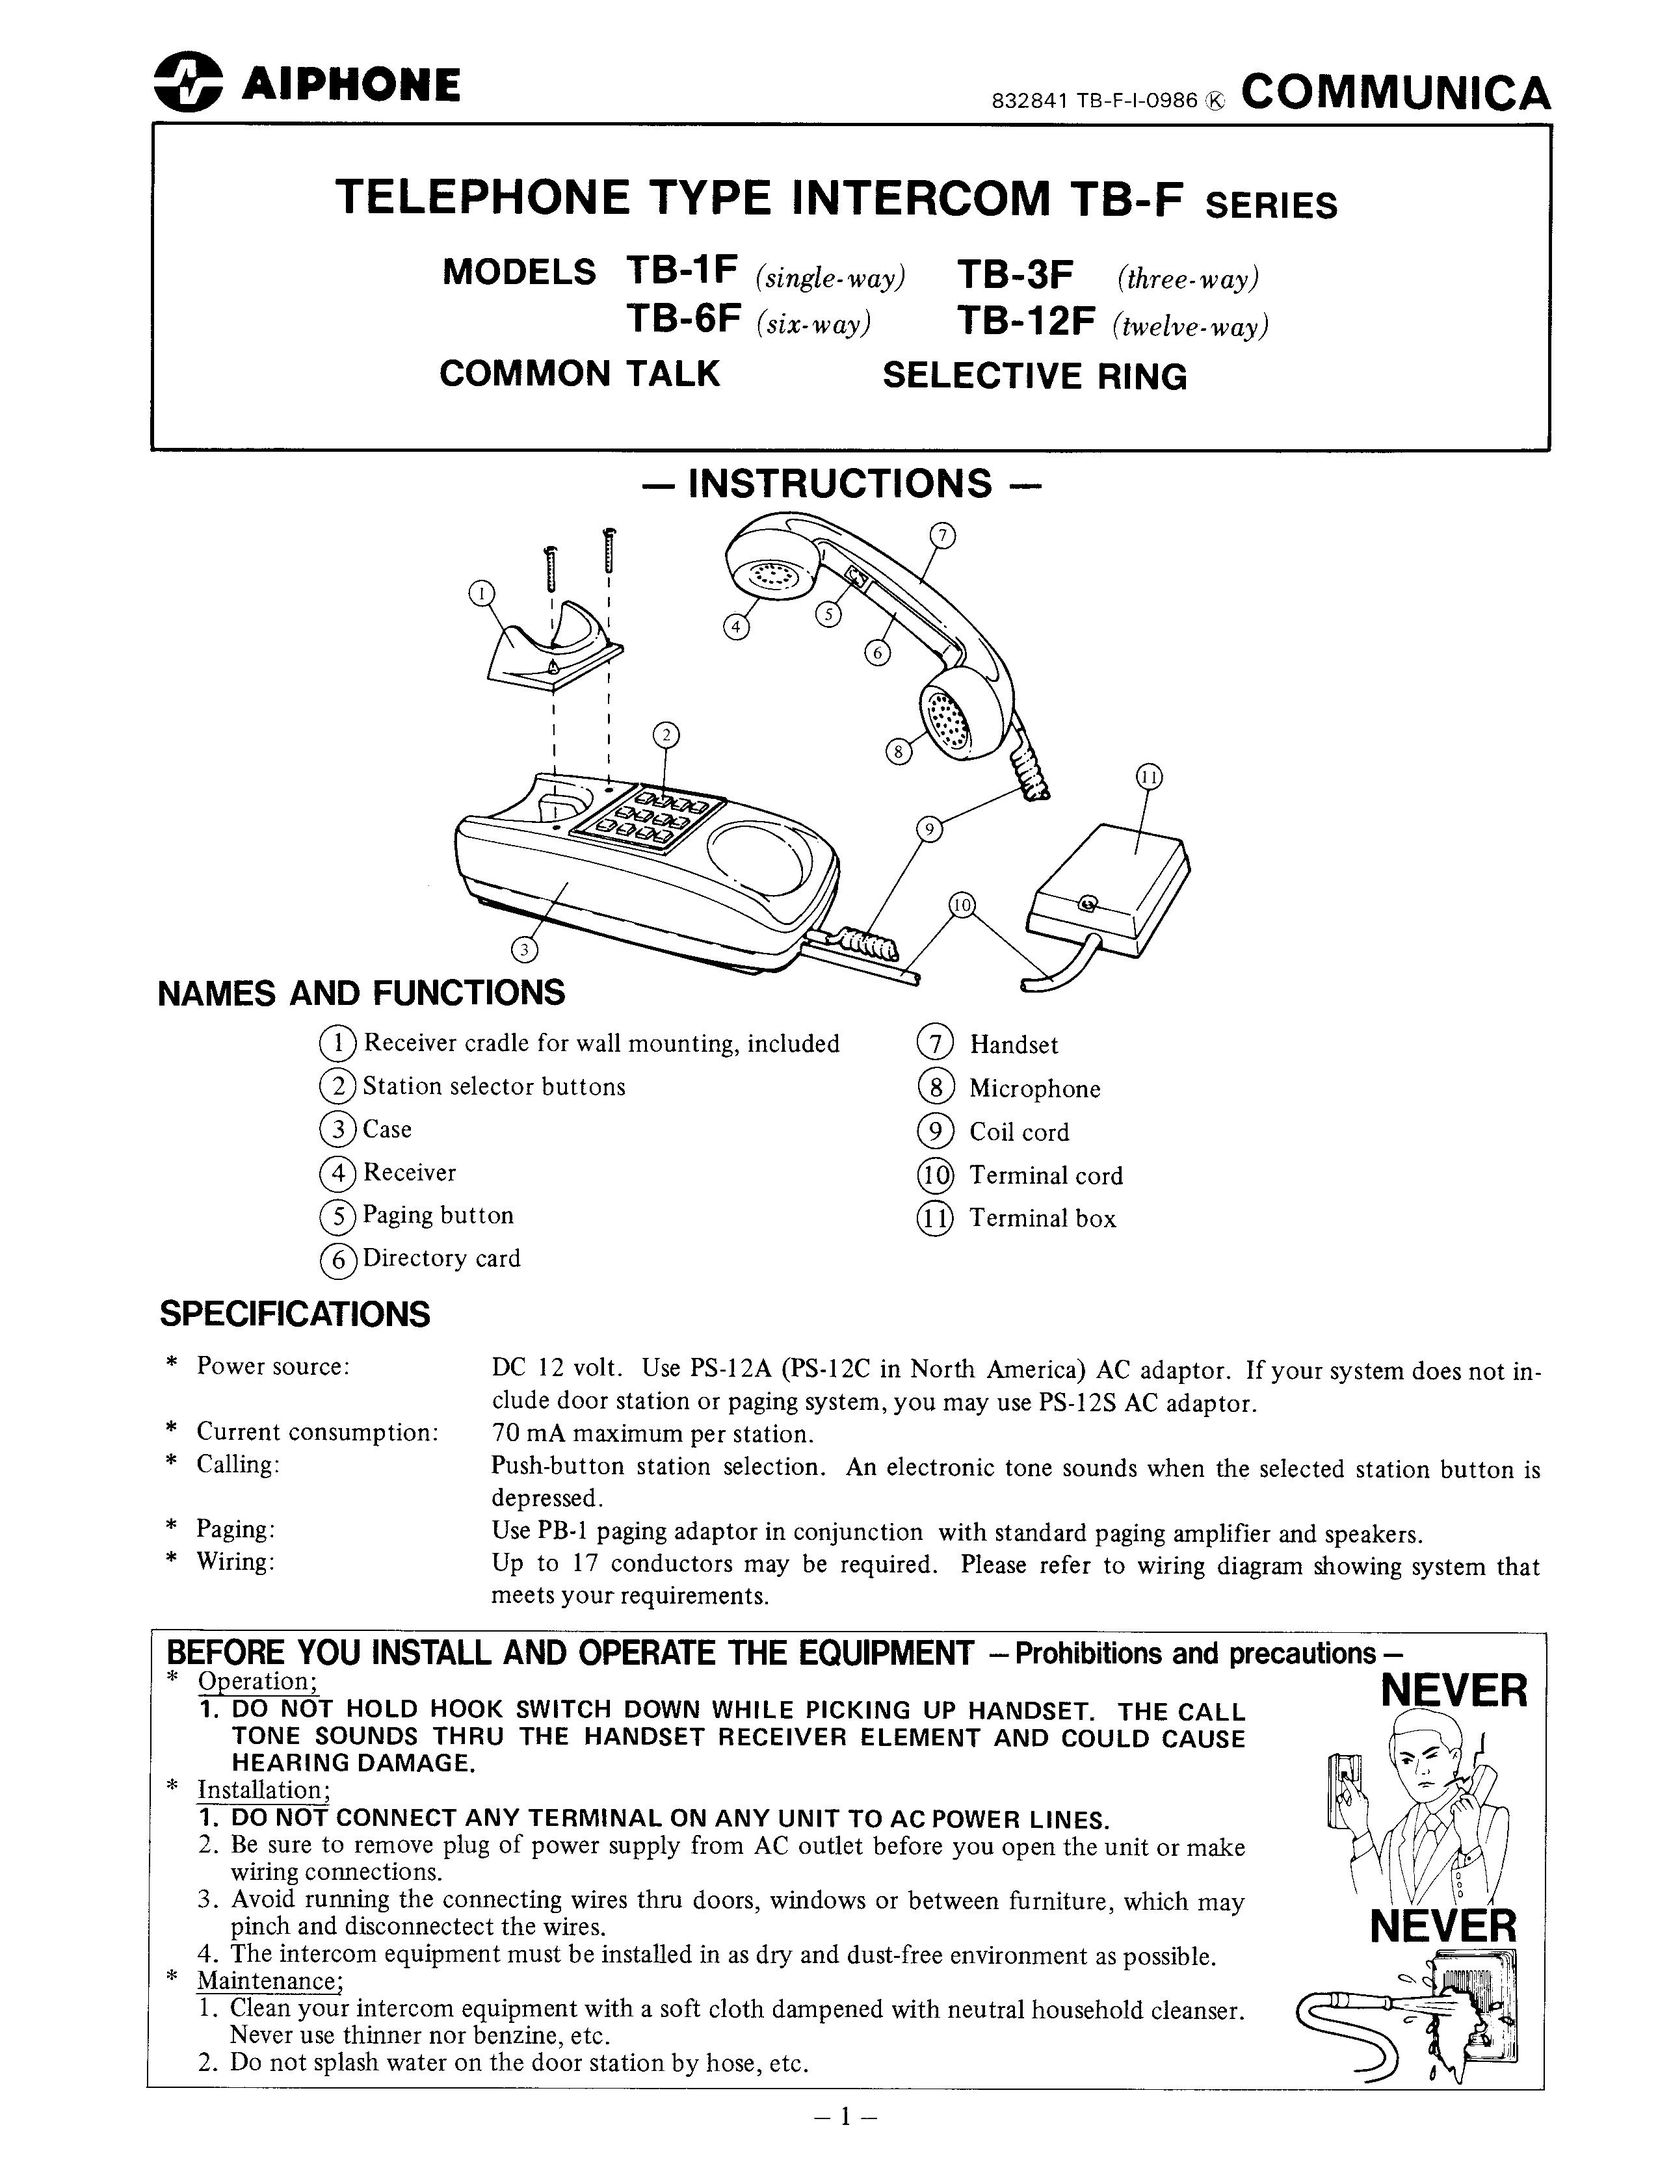 Aiphone TB-1F Telephone User Manual